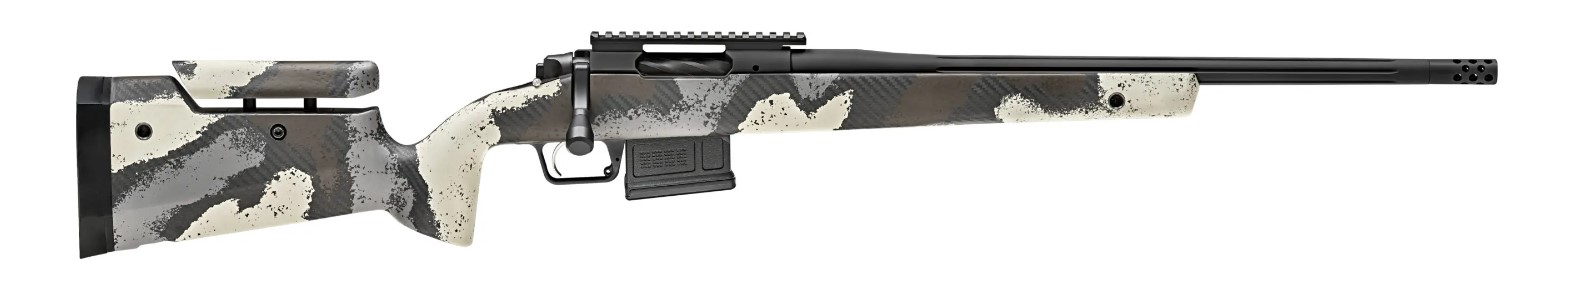 SPR 2020WP 308 ADJ 20 RIDG 5RD - Long Guns